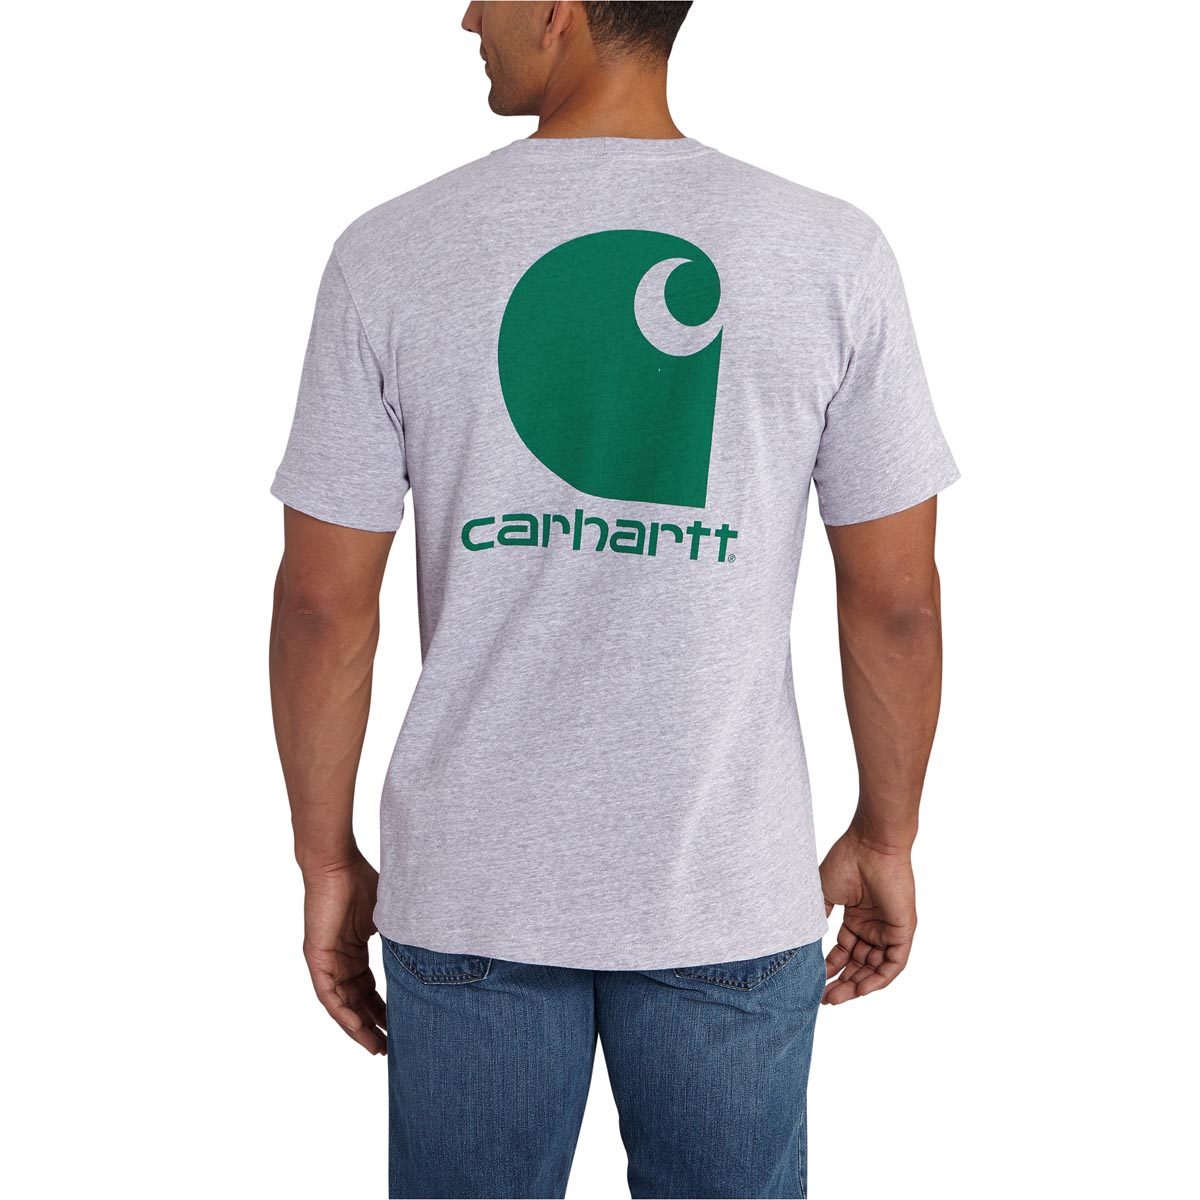 Carhartt Men's Maddock Graphic Shamrock Branded C Short Sleeve T Shirt